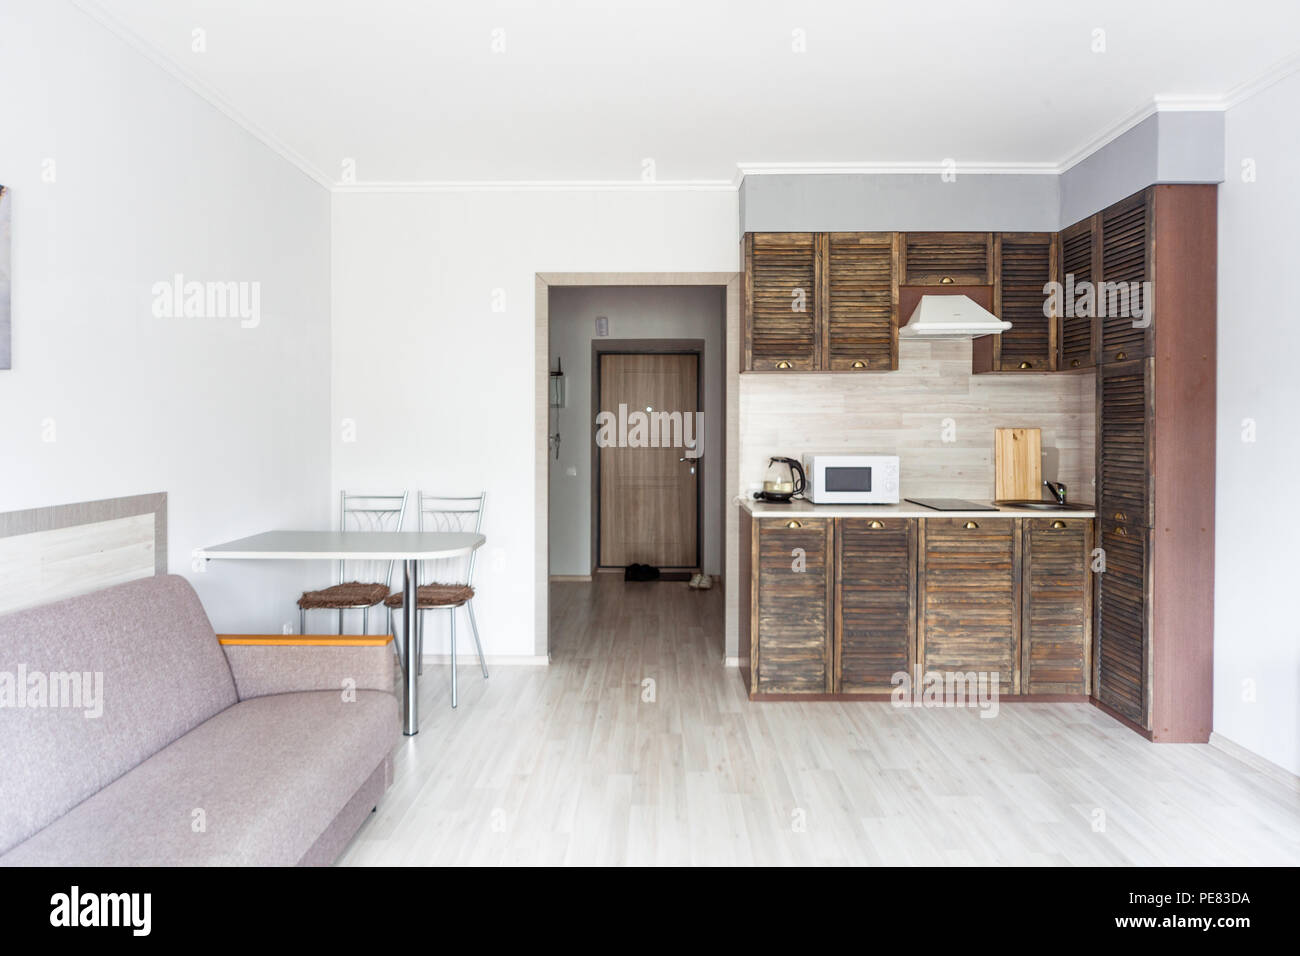 Small and light studio apartment interior Stock Photo